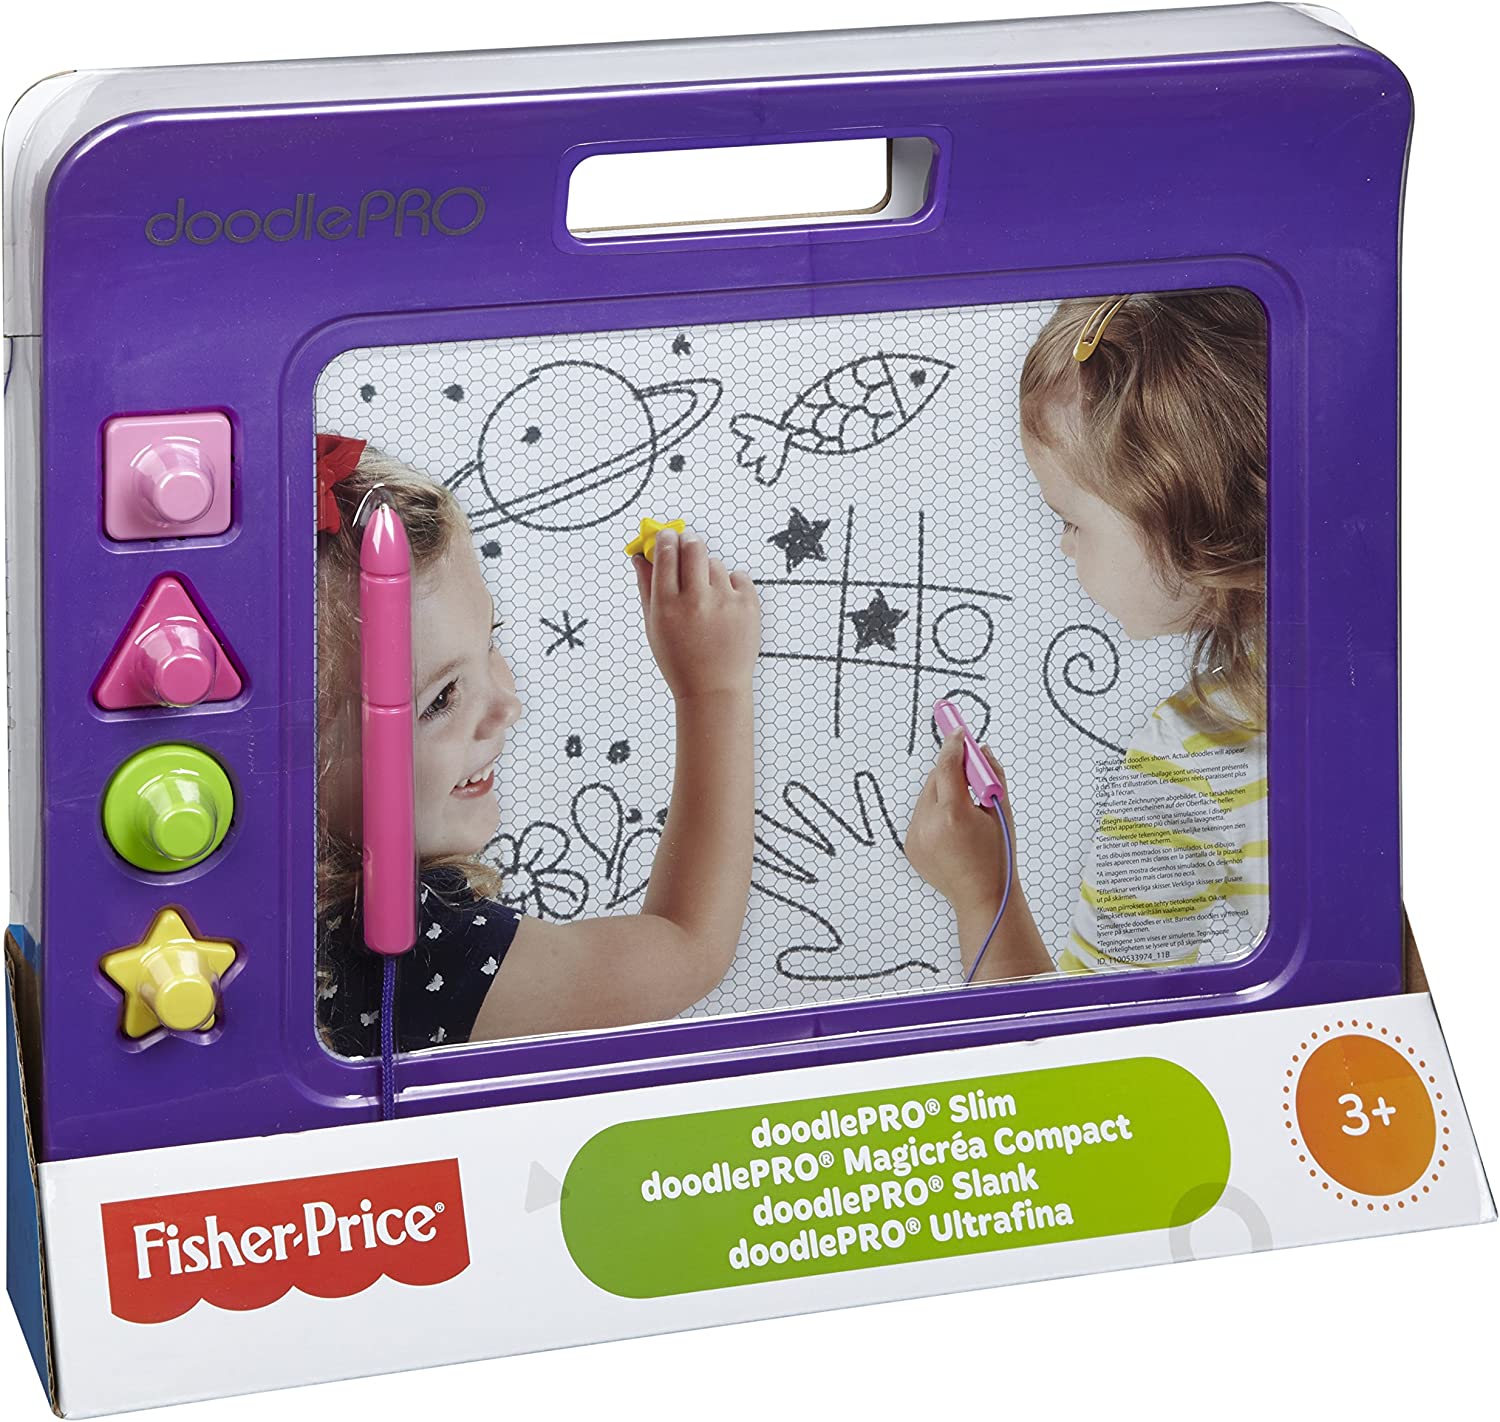 Fisher-Price Mattel CHH61 Doodle pro Slim (Purple)